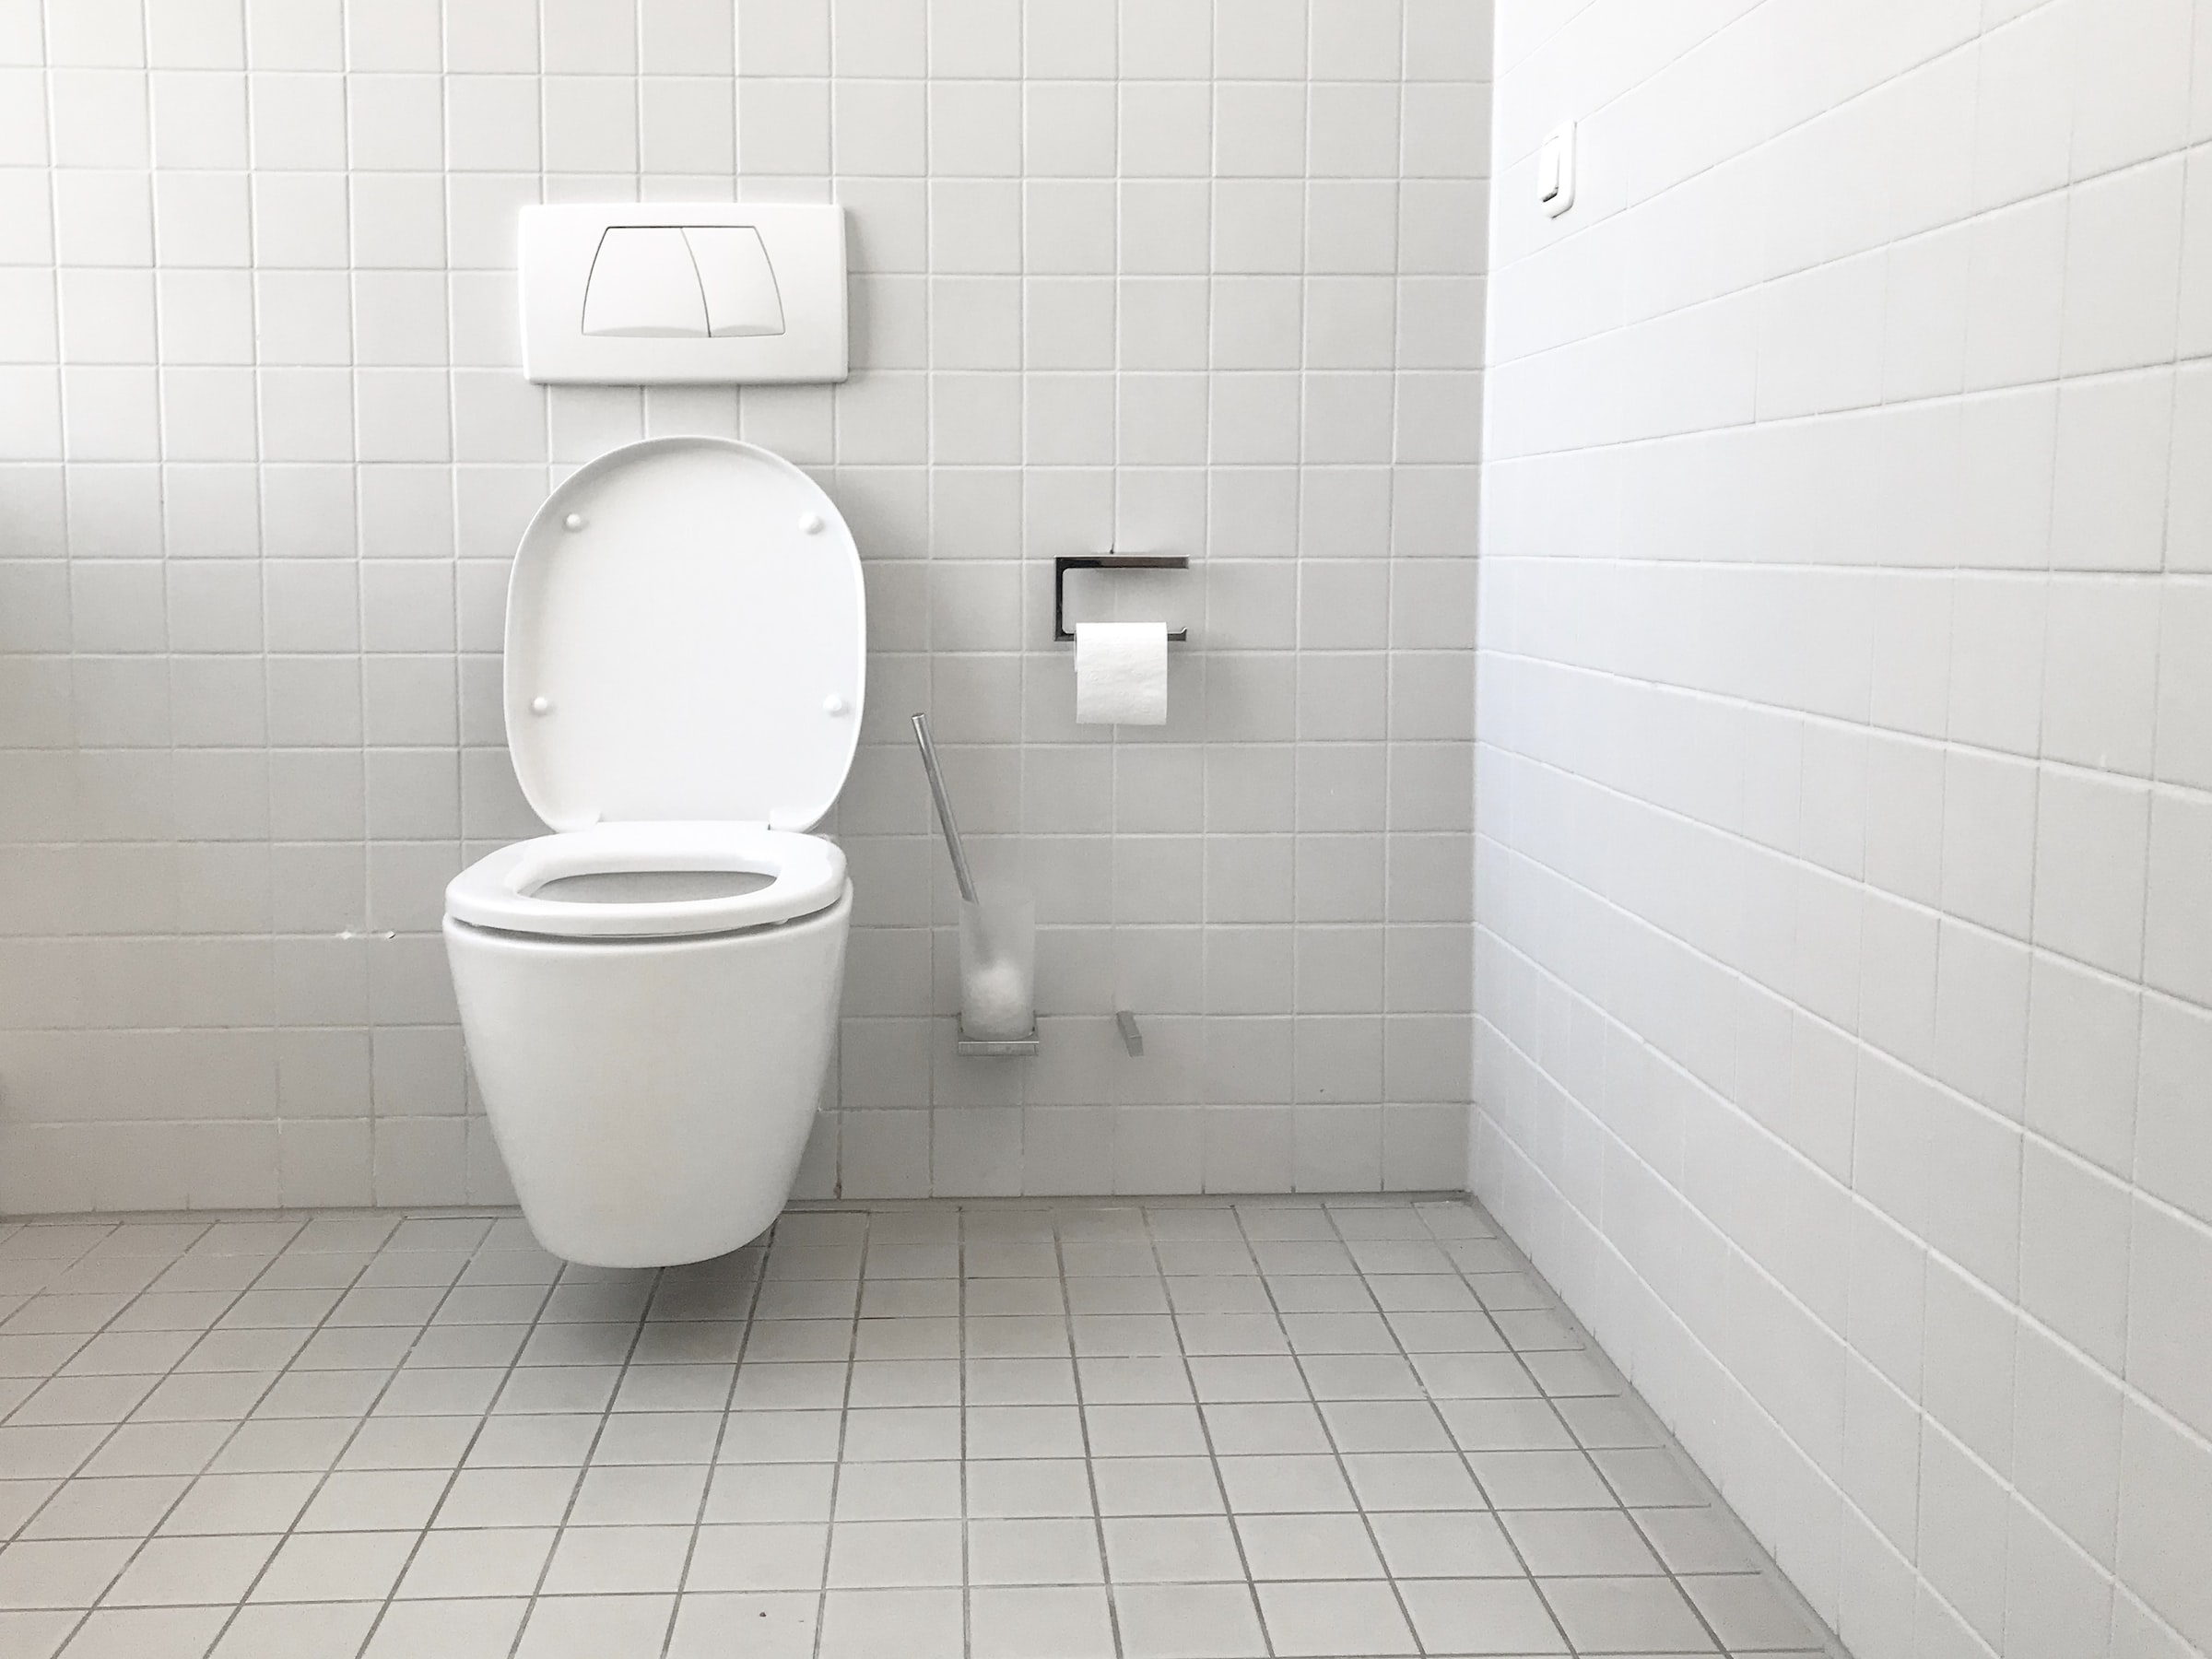 A toilet in a modern bathroom